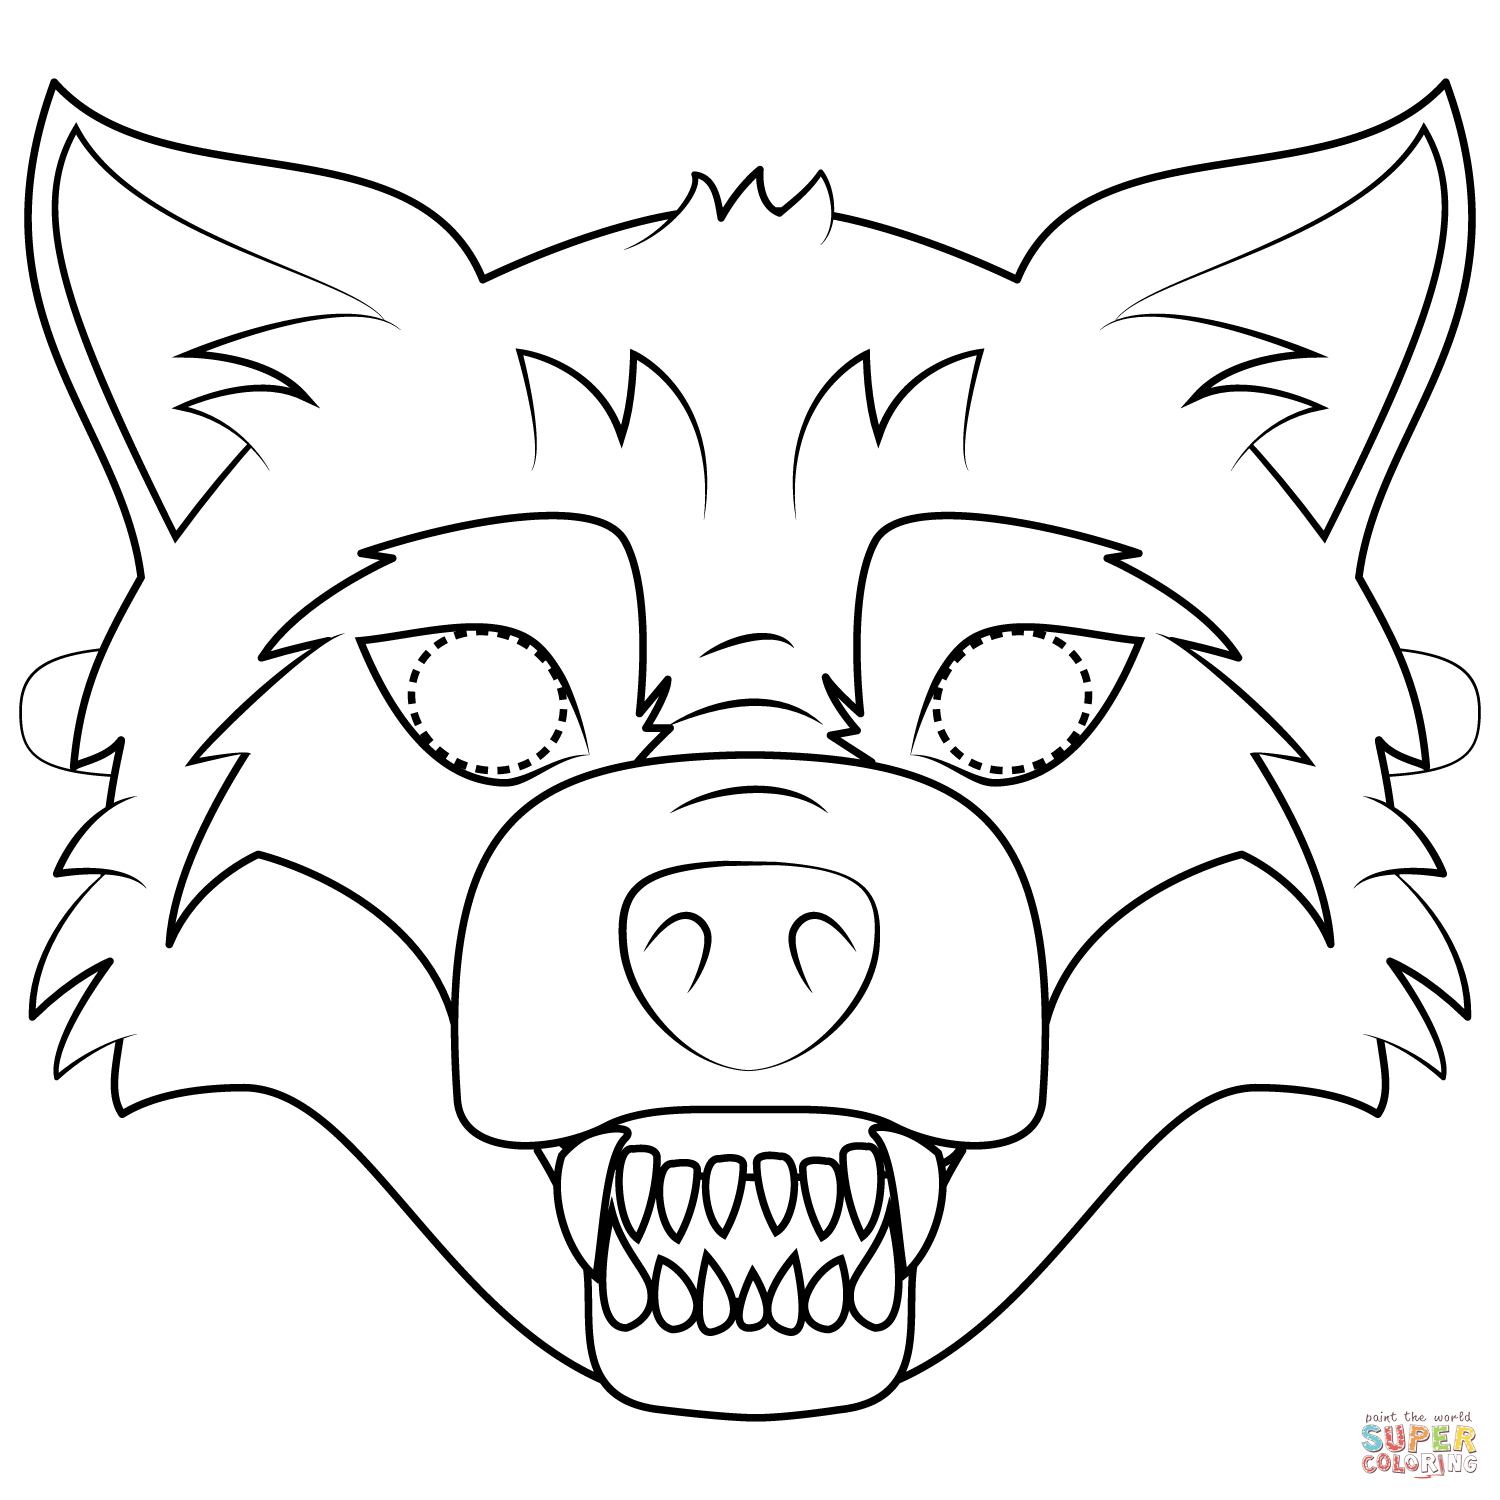 Big Bad Wolf Mask Coloring Page | Free Printable Coloring Pages - Free Printable Wolf Face Mask